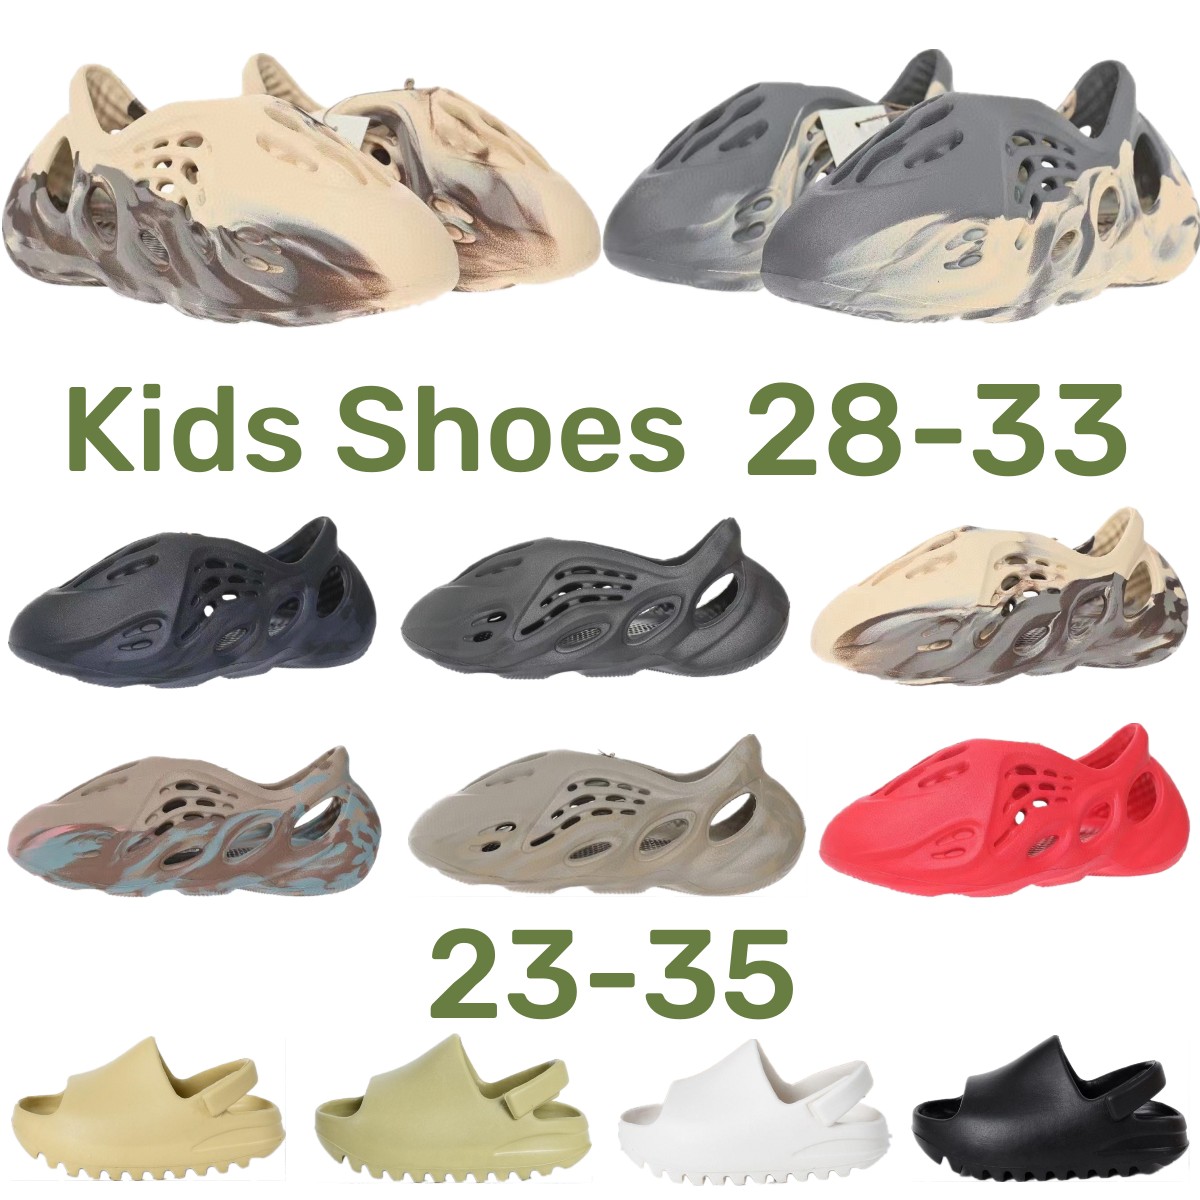 

Kids Shoes Foam Runner Slippers jelly Sandals Designer baby Fashion toddler boys gril Slides Resin black trainers Summer Beach children kid shoe Sage Onyx Cream Clay, No box